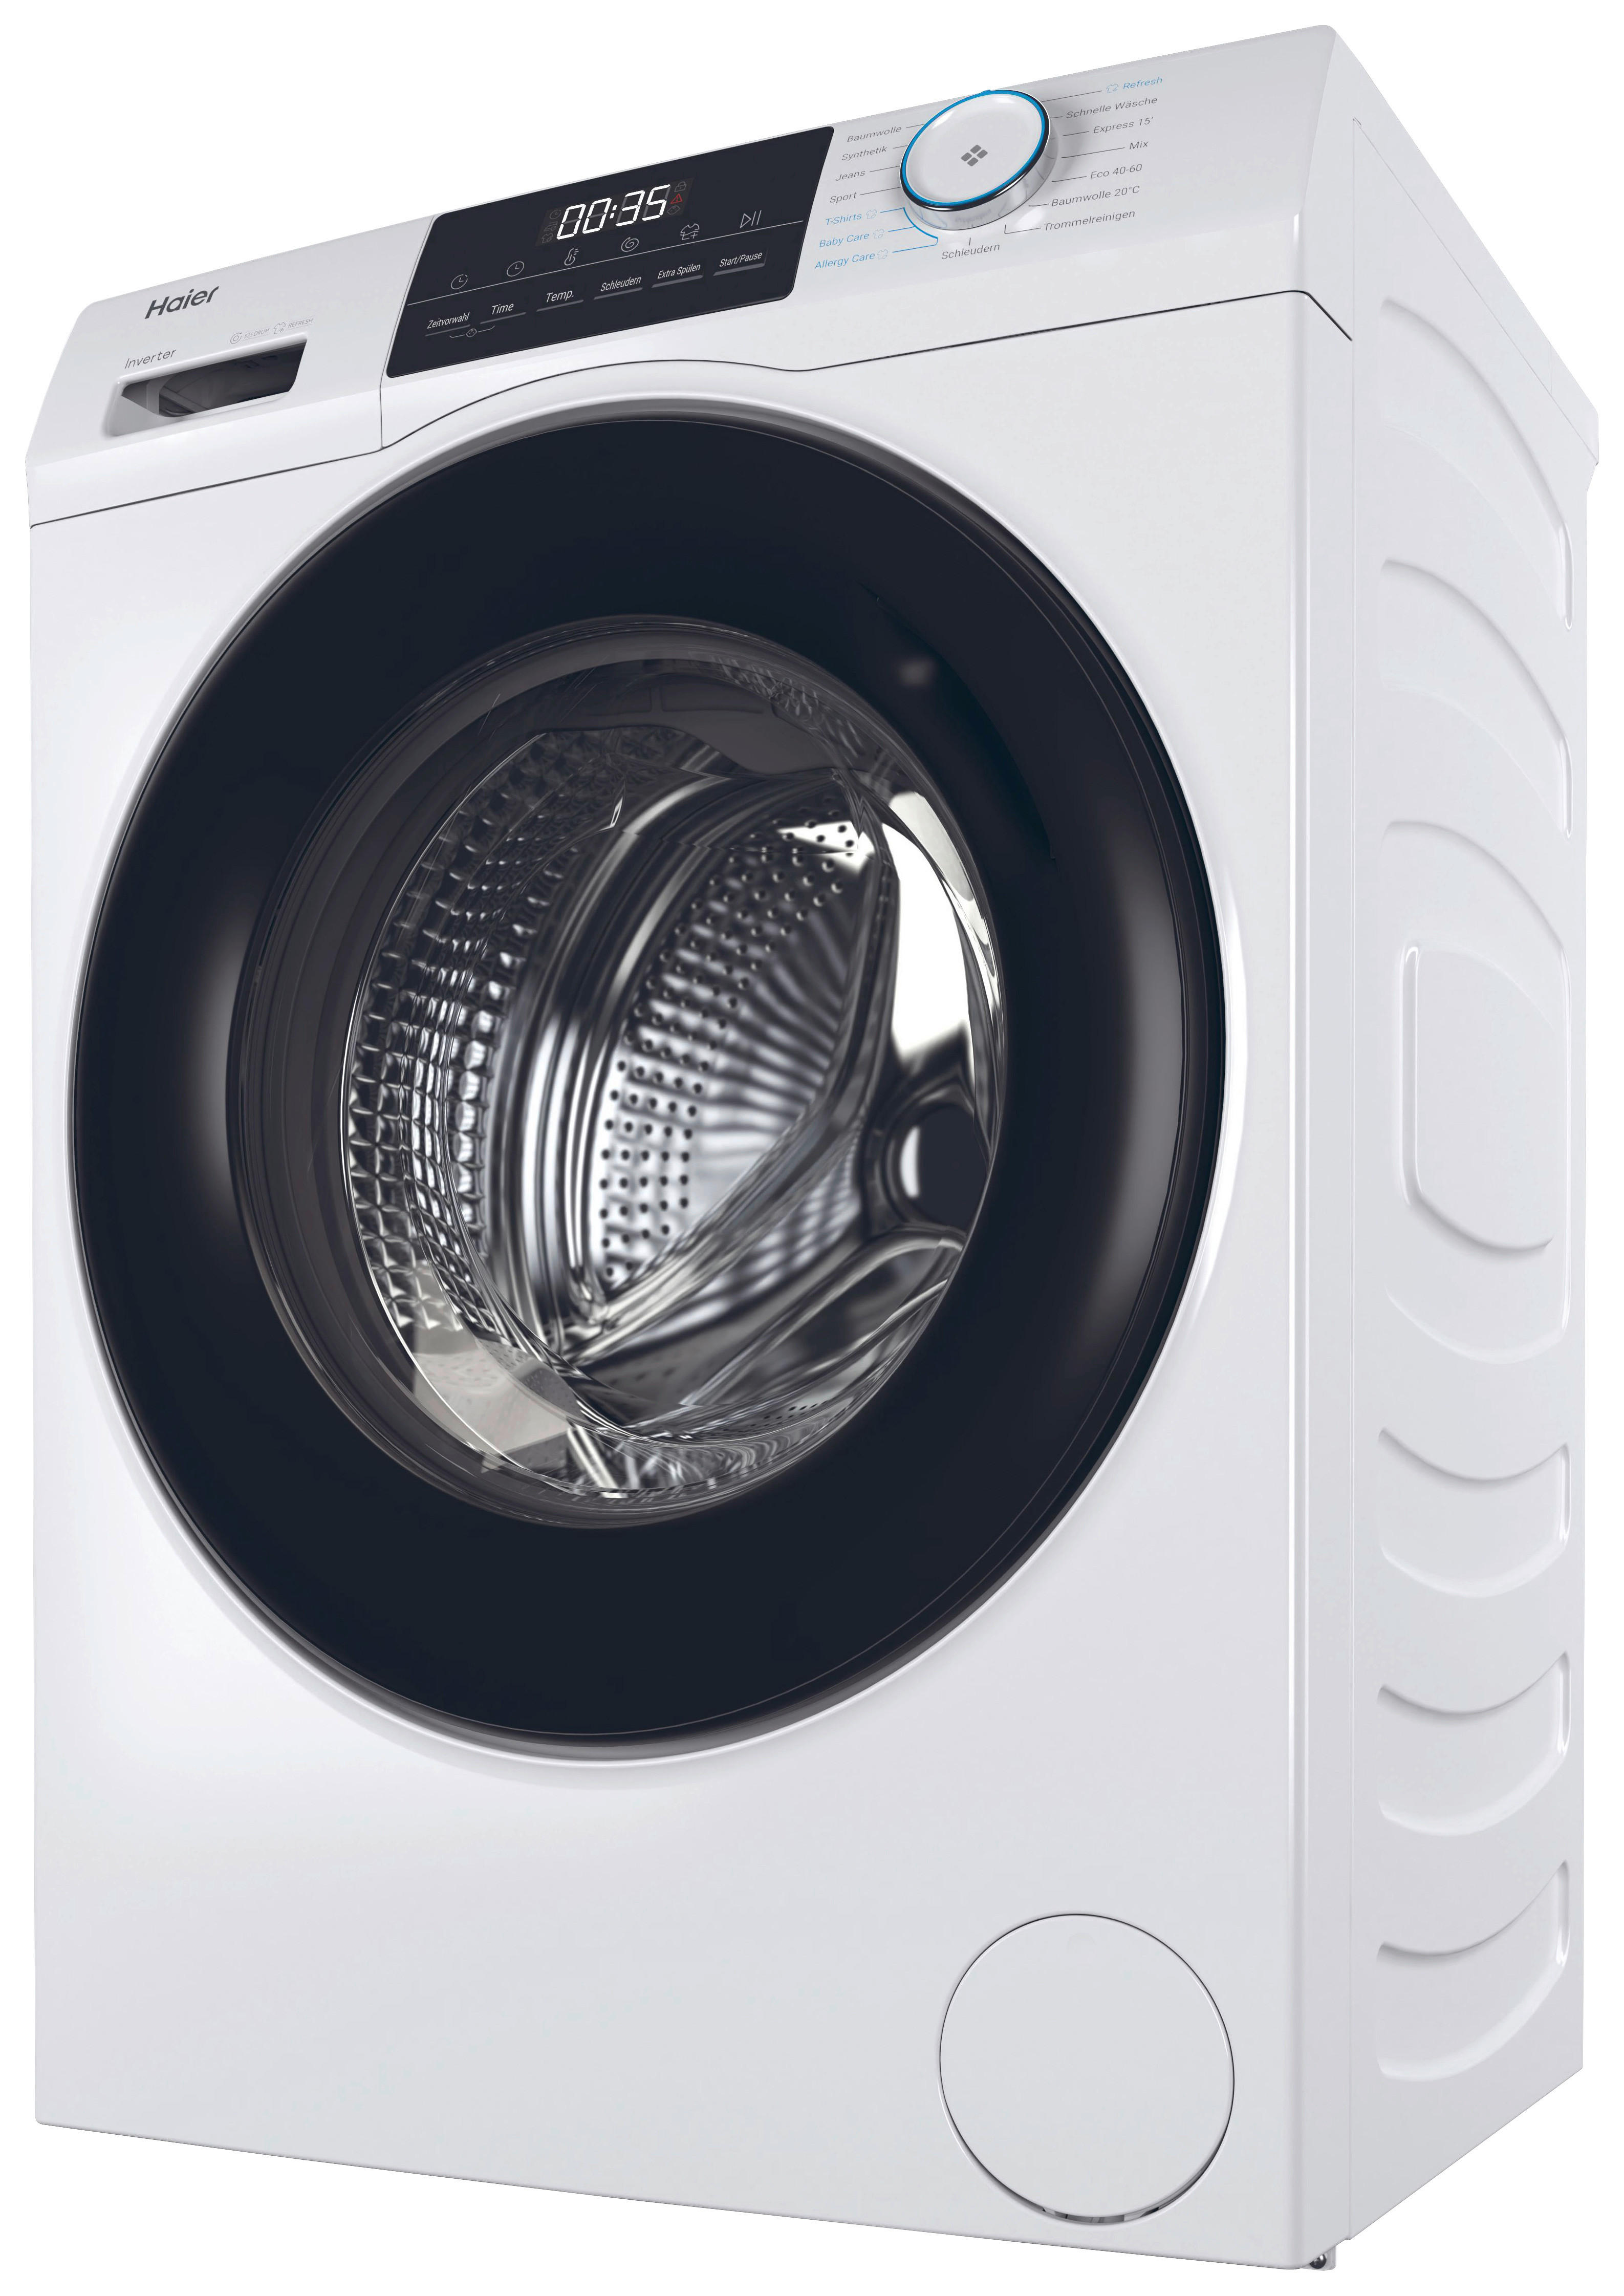 Haier Waschvollautomat HW70-BP14929 weiß B/H/T: ca. 60x85x42 cm ca. 7 kg Waschmaschine HW70-BP14929 - weiß (60,00/85,00/42,00cm) - Haier